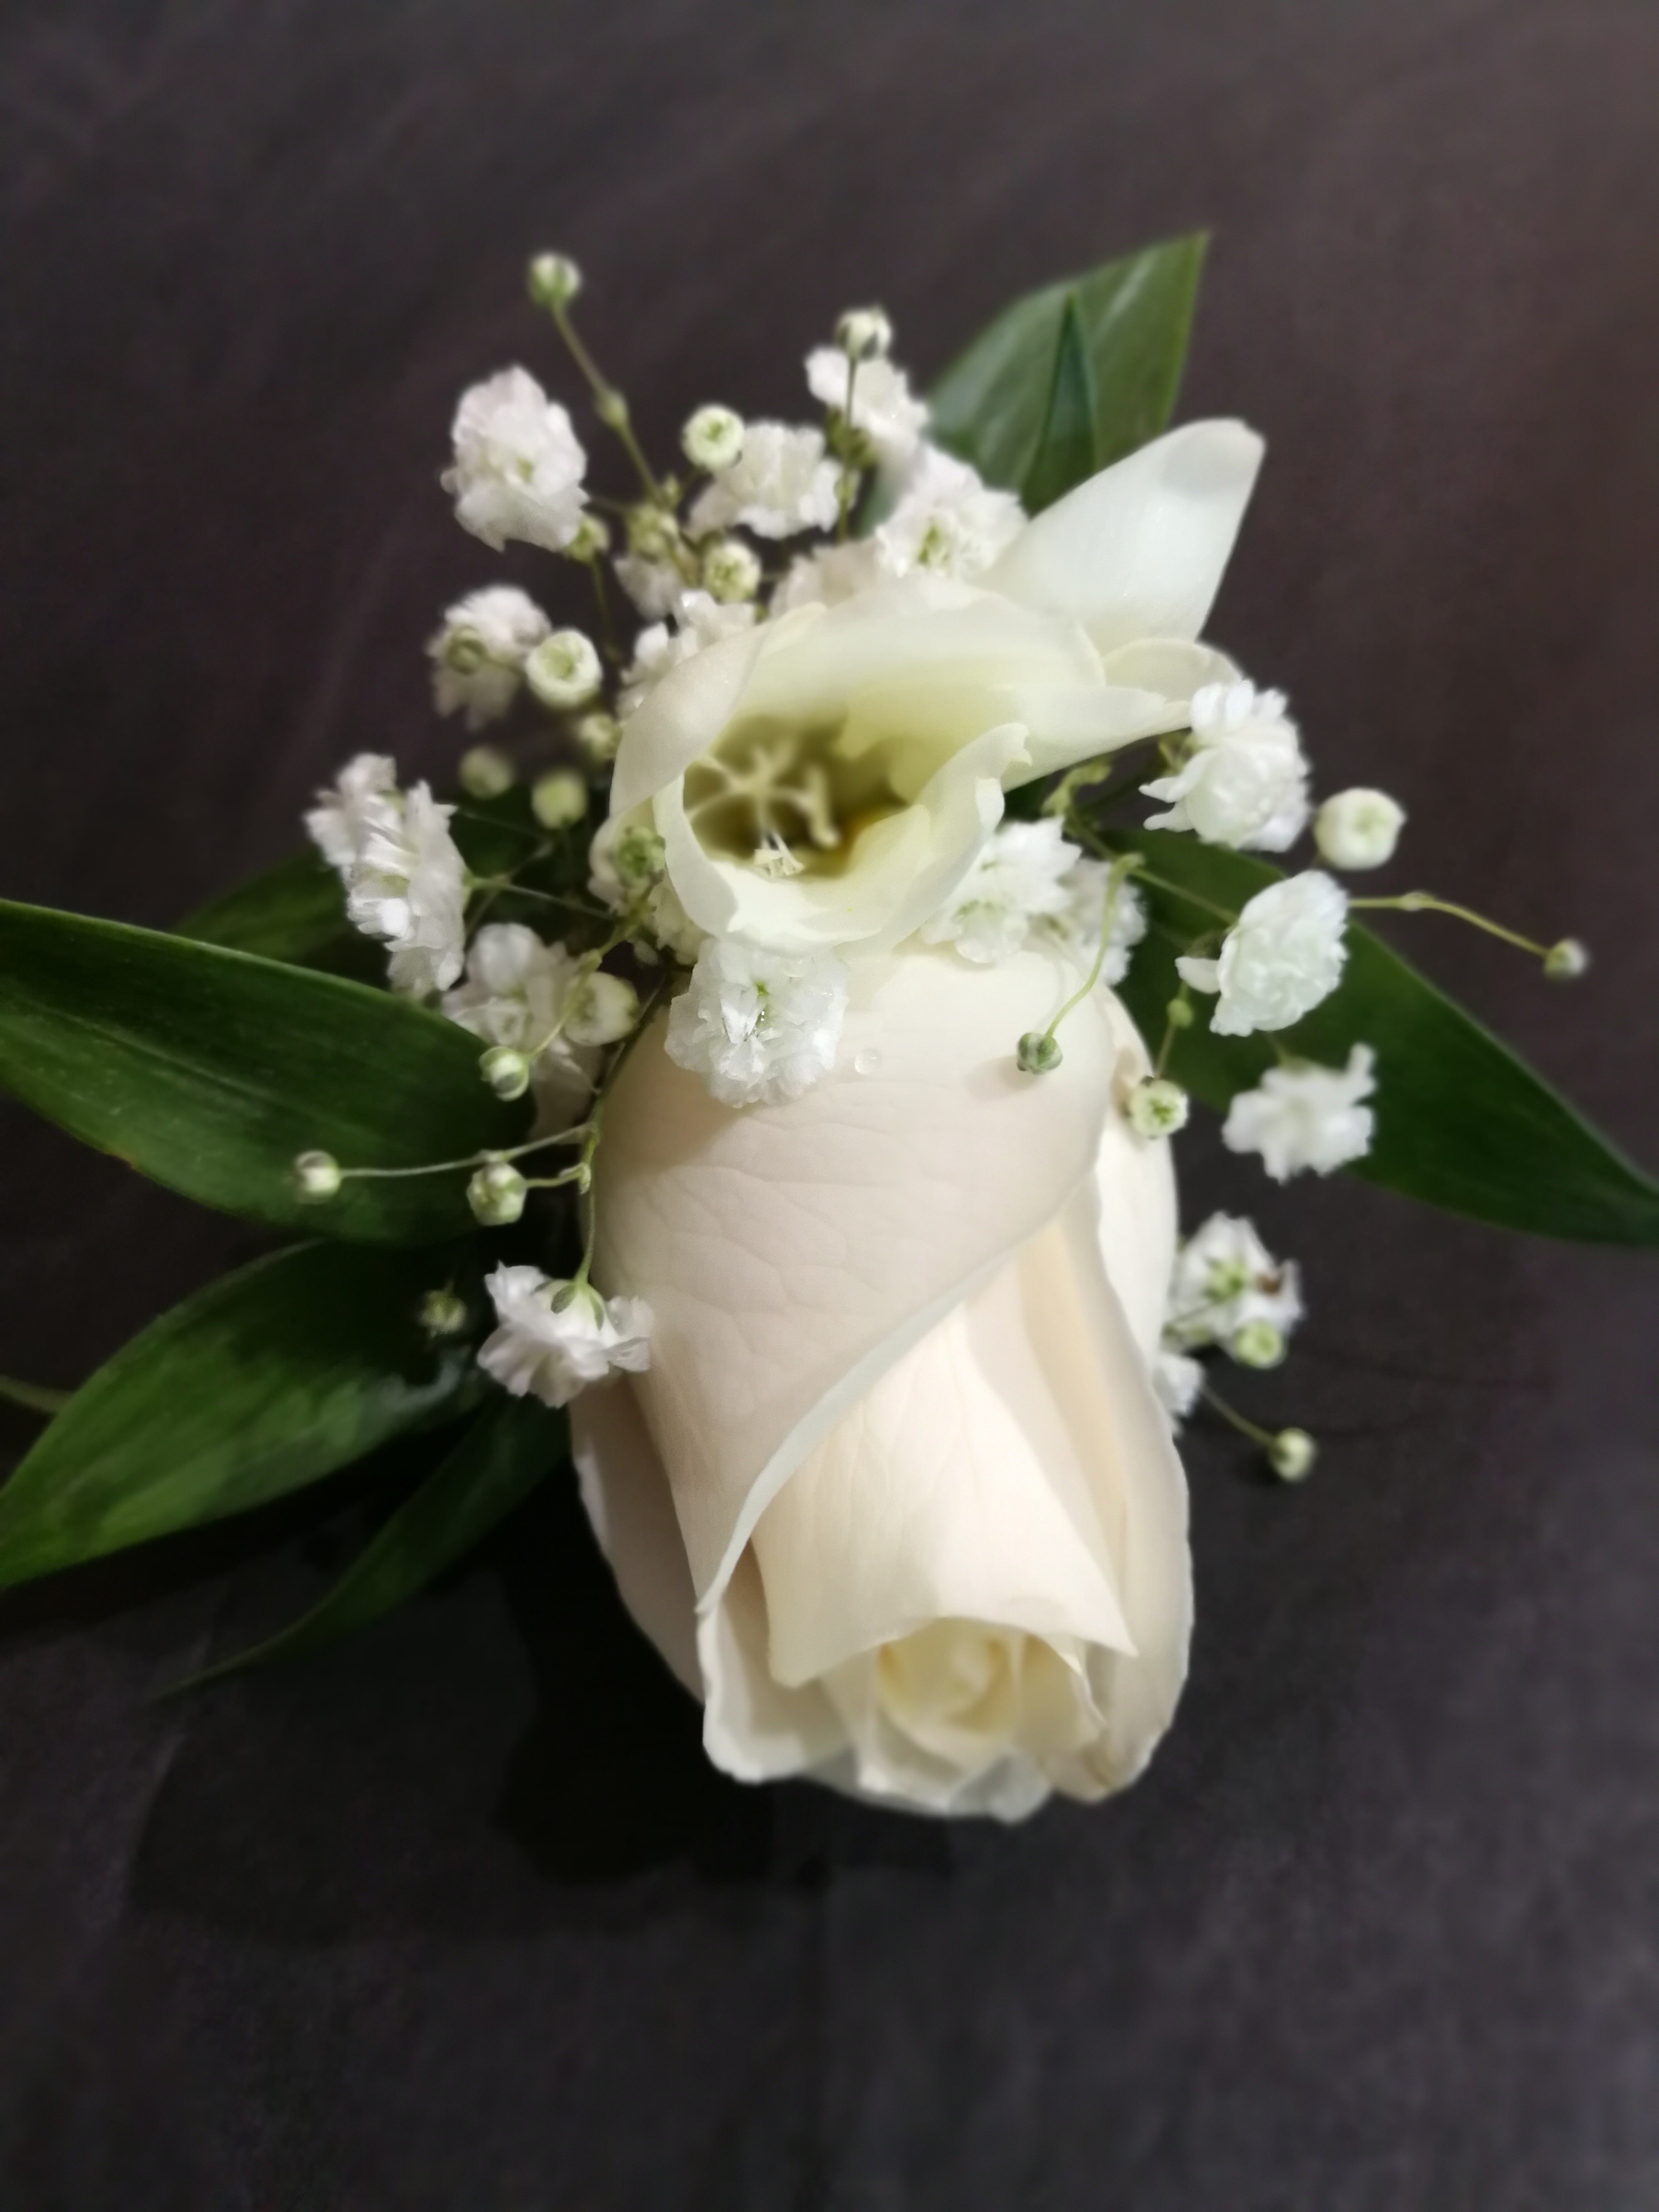 Boutonnière - Single Cream Rose w/ White Accents